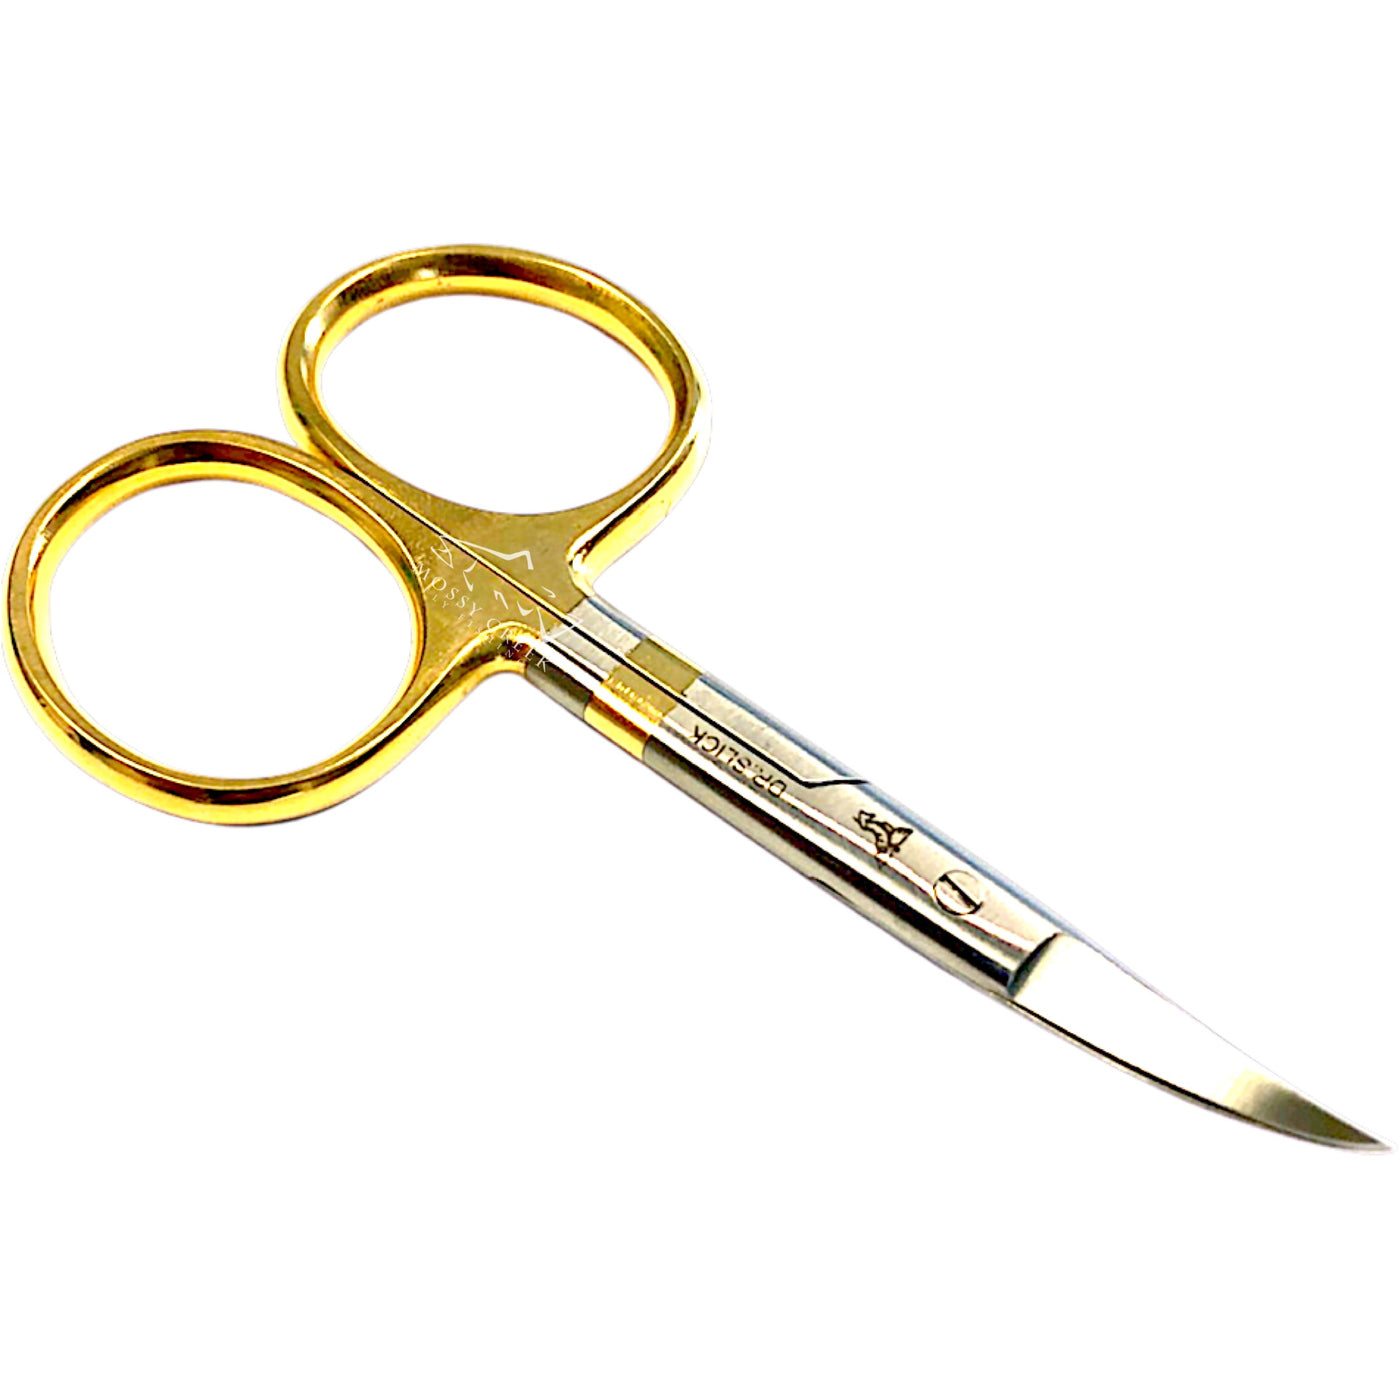 Dr. Slick 4 All Purpose Scissor Curved